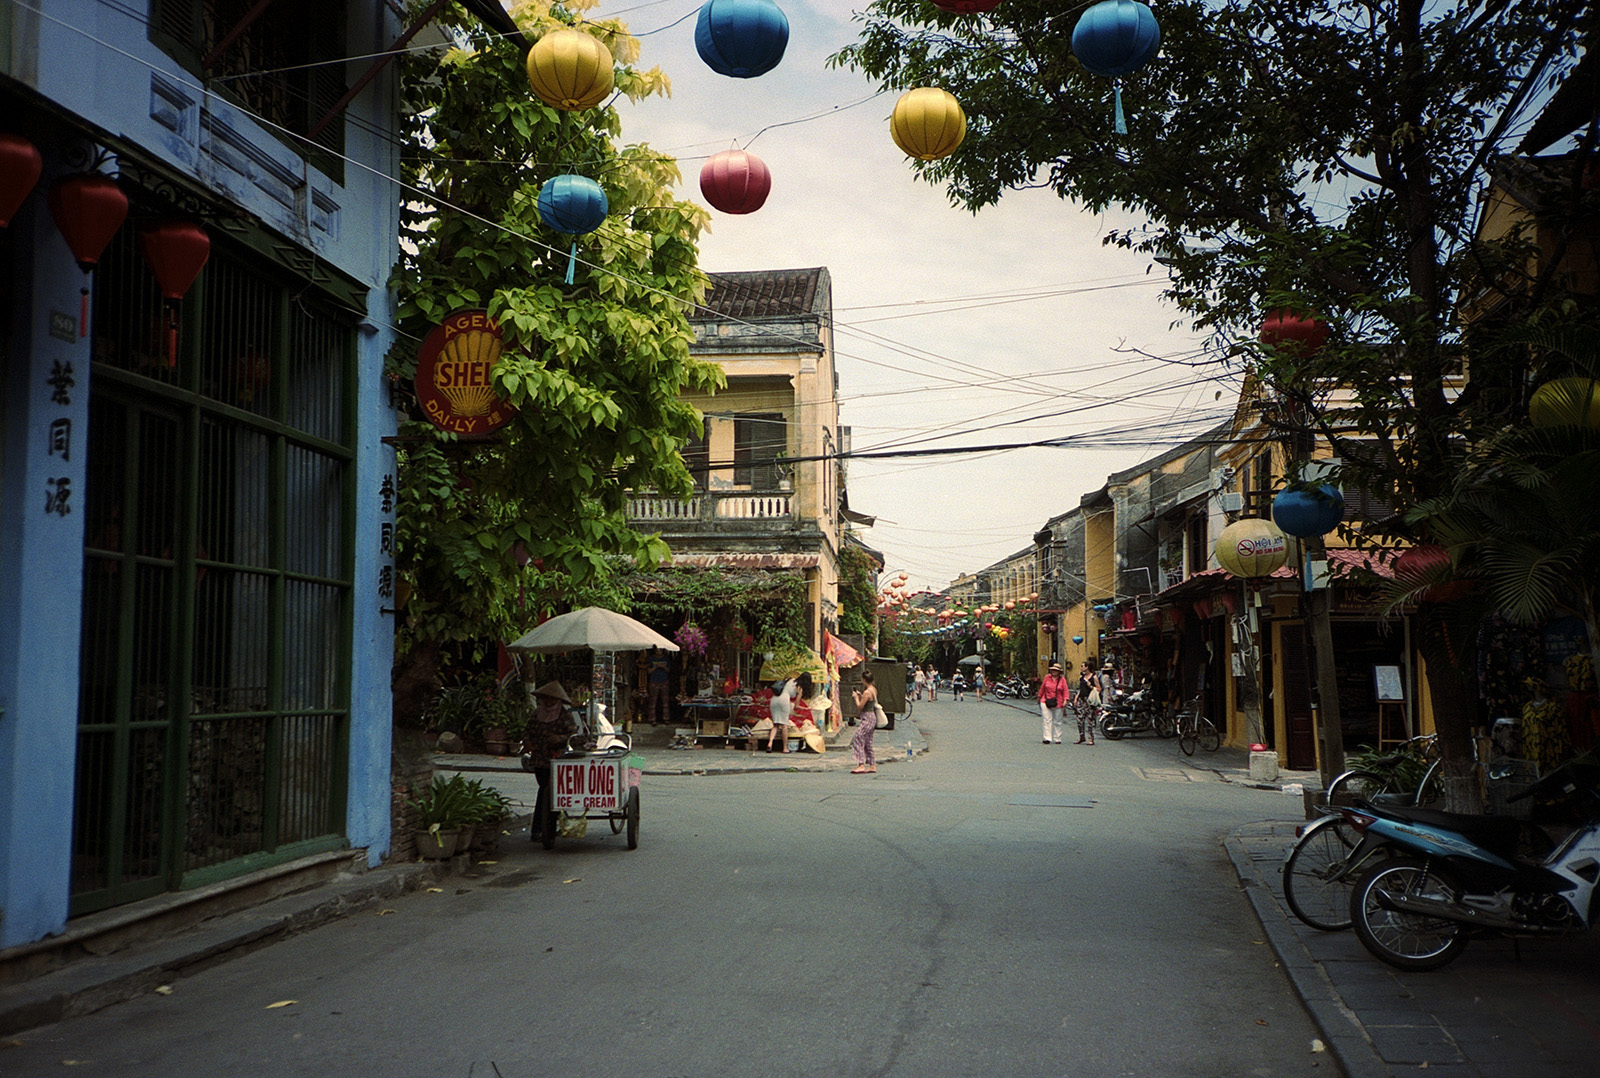 Colourful lanterns a symbol of Hoi An, street scene.